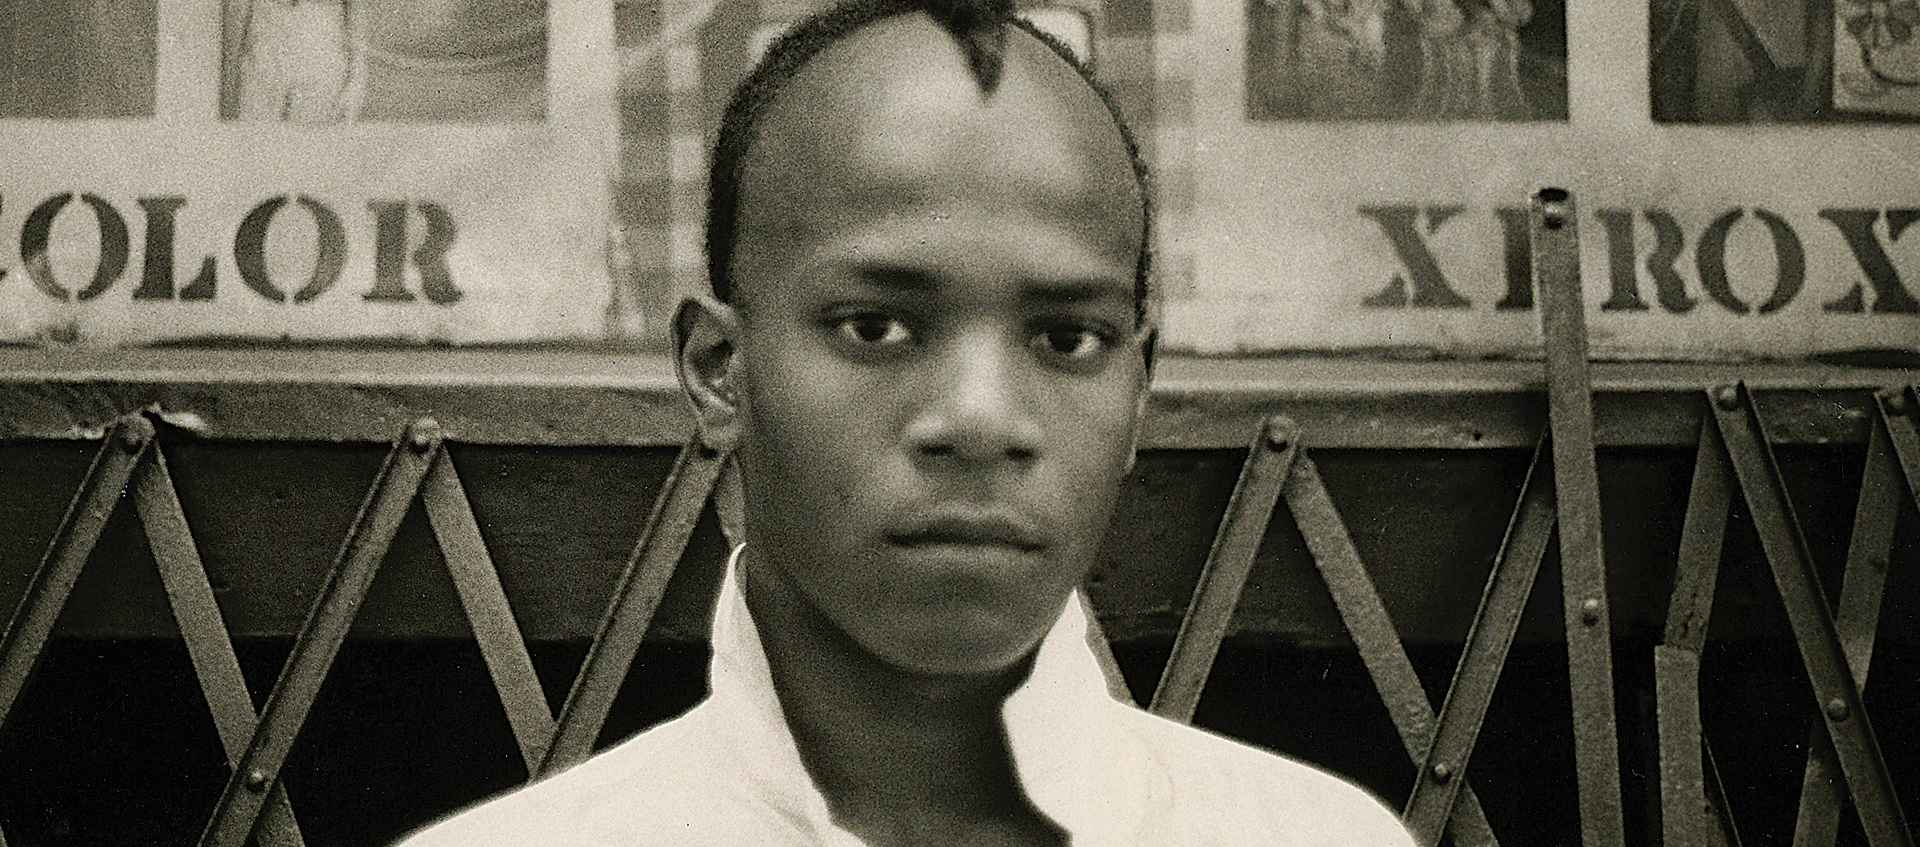 a photo of jean michel basquiat